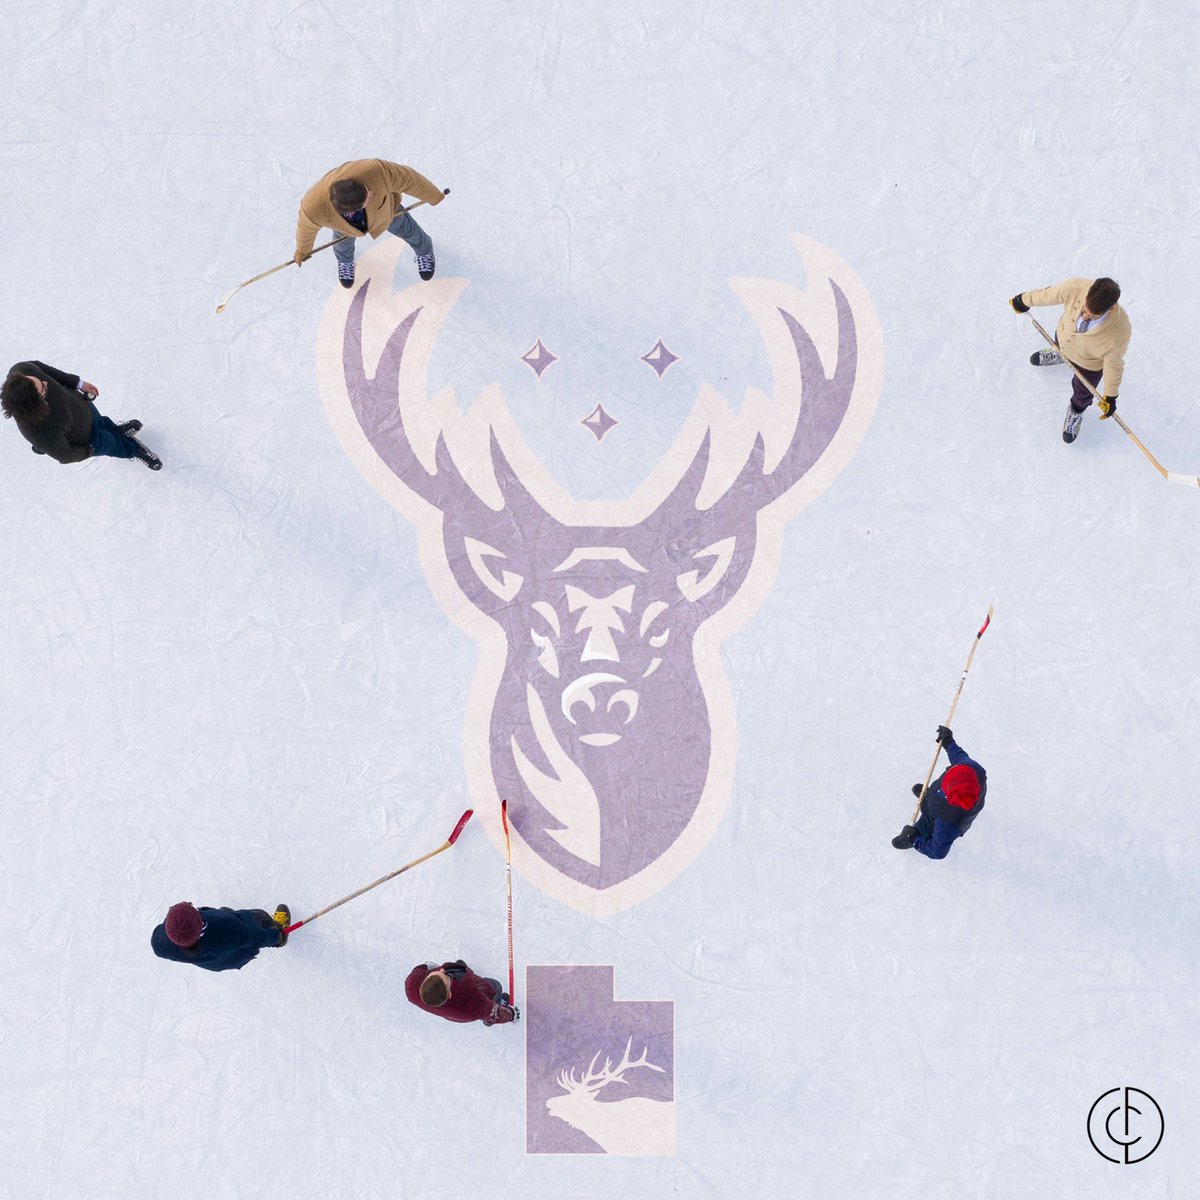 The Utah Caribou 🦌 

#utah #slc #SaltLakeCity #nhl #graphicdesign #graphicdesigner #sportsdesign #jerseyconcept #jerseyconcepts #uniformconcepts #nhlhockey #saltlakecityutah #nhljersey #hockey #hockeyjersey #nhlinutah